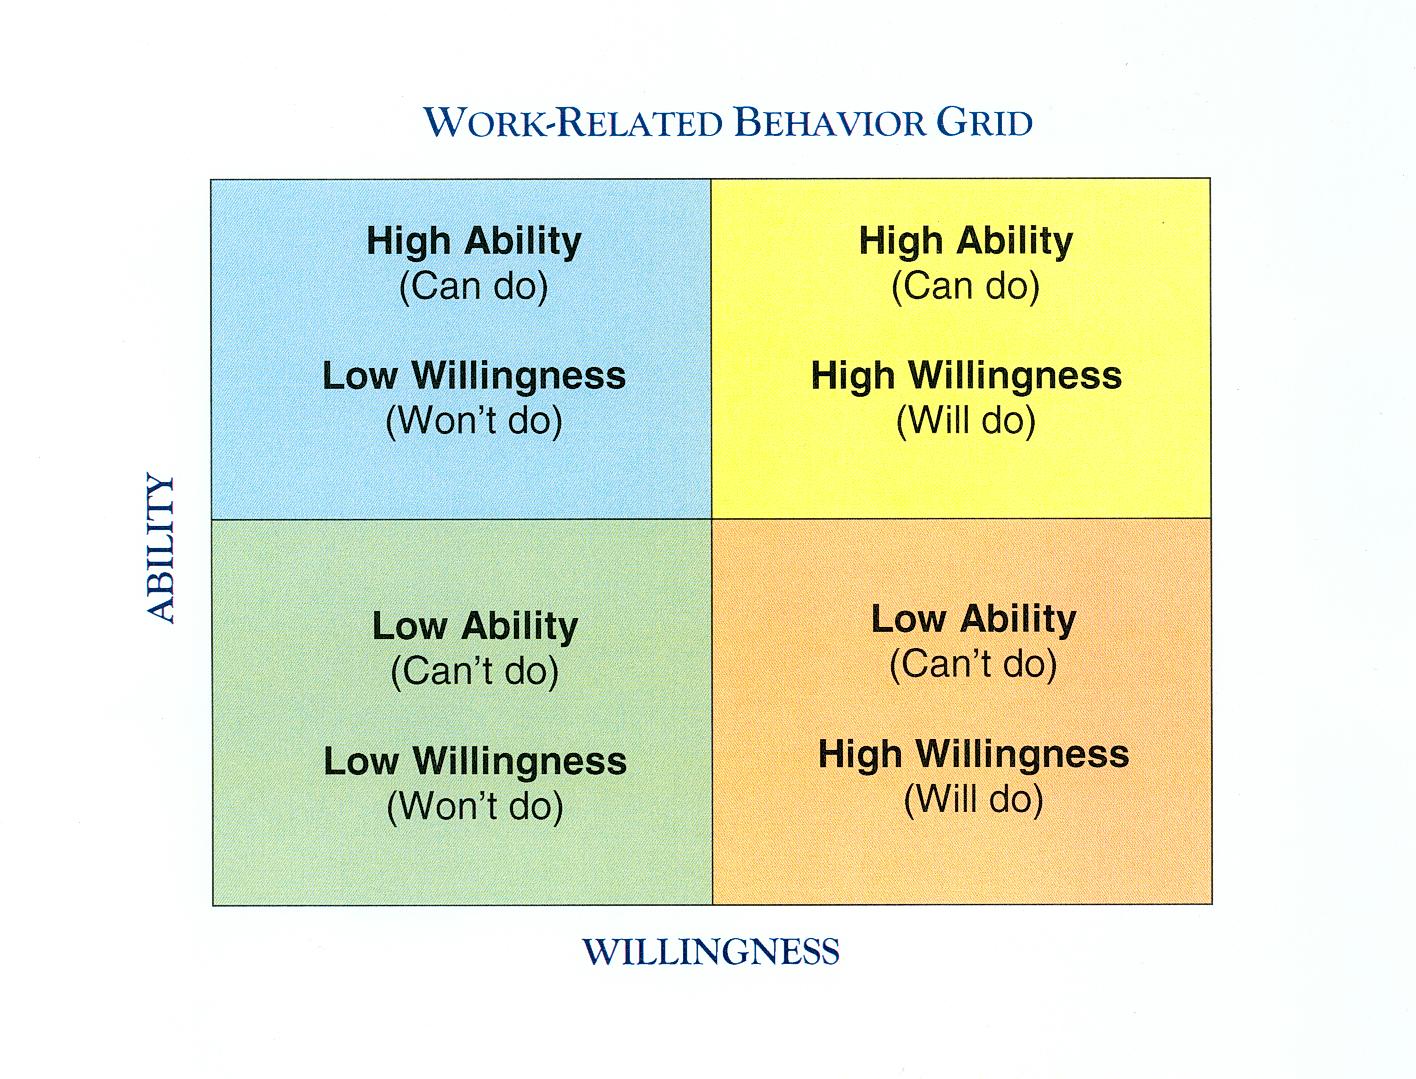 Grid displaying work-related behaviors.